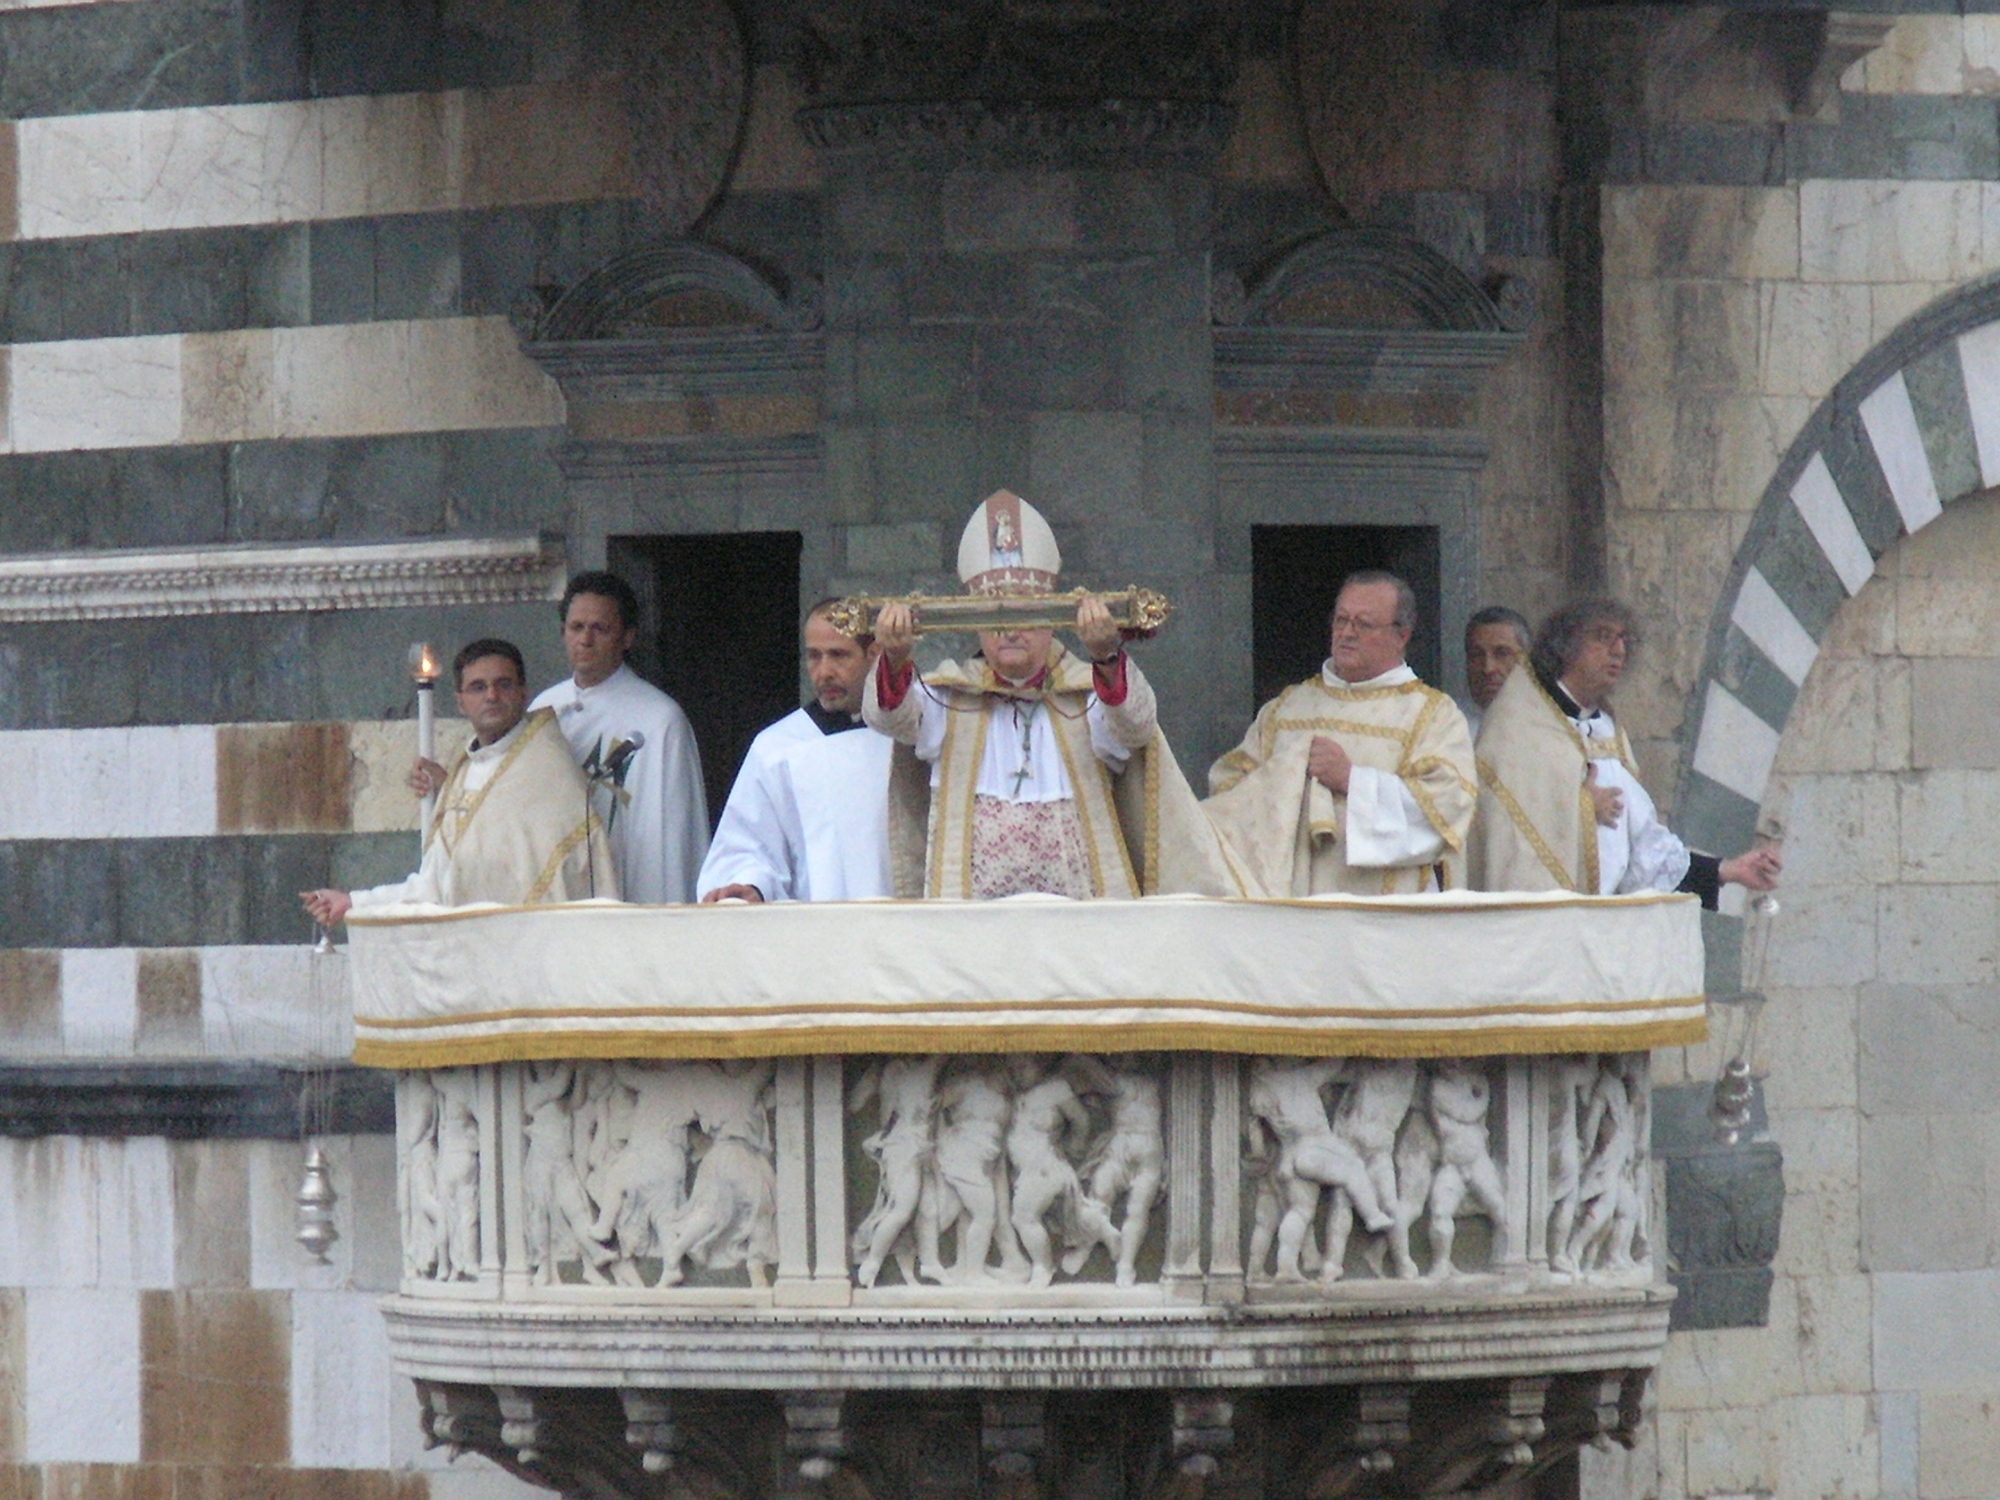 Display of the Sacra Cintola